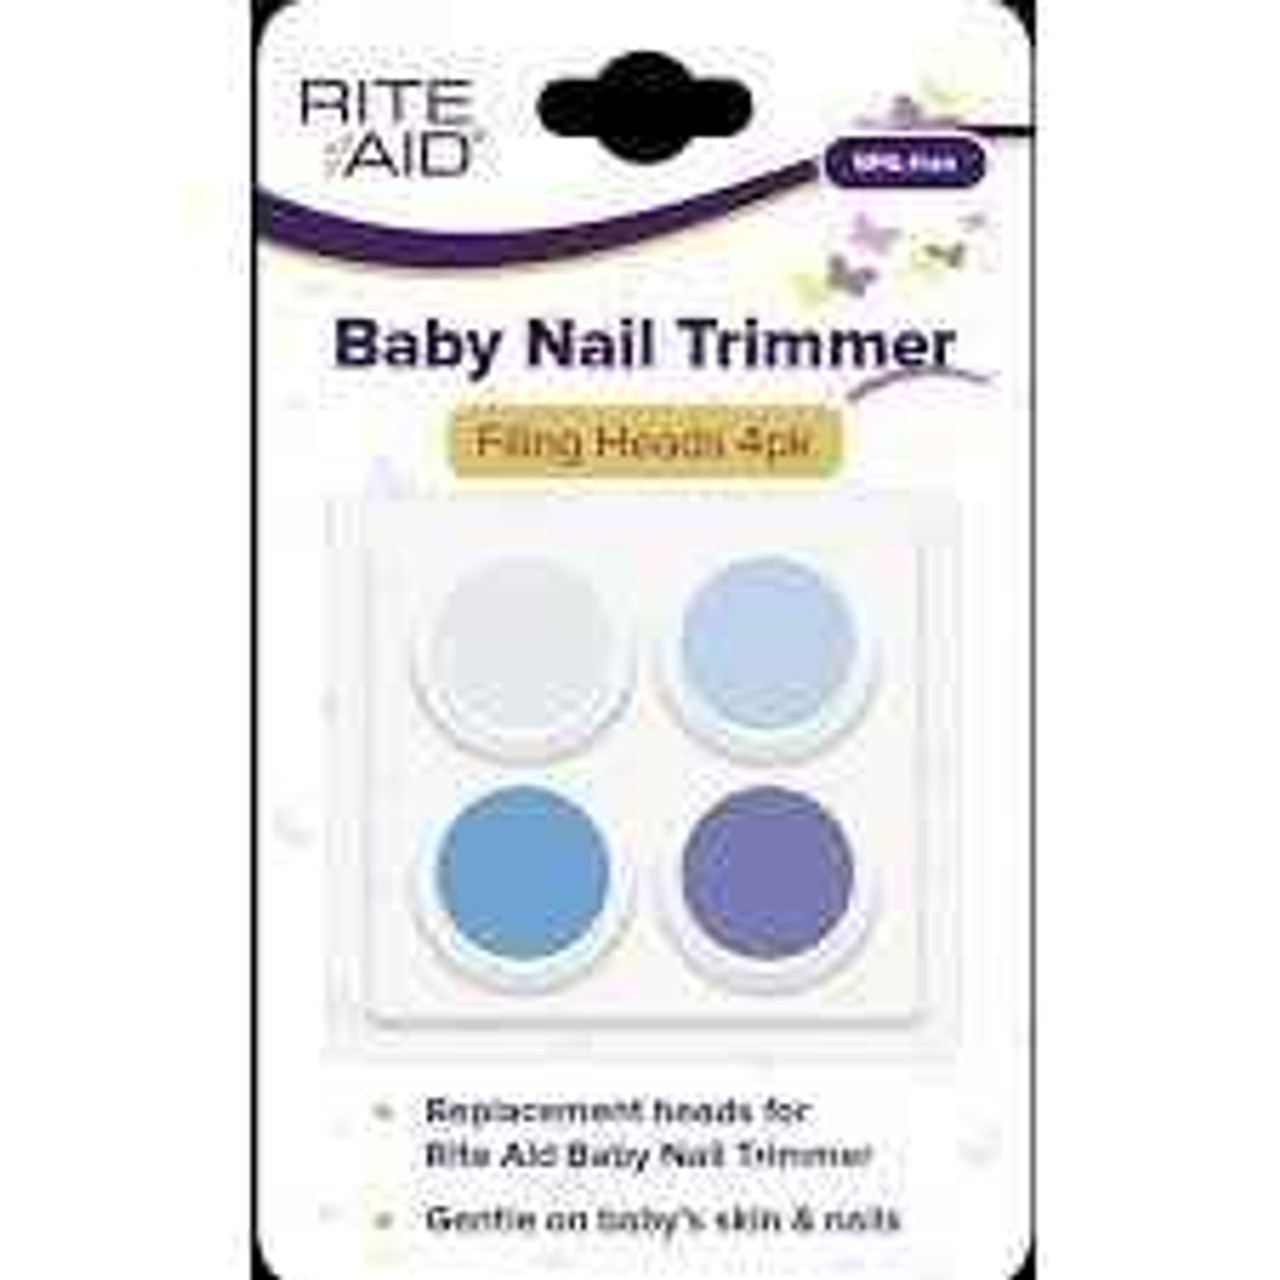 rite aid baby nail trimmer filing heads 4pk riteaid superpharmacyplus 91164.1655782356